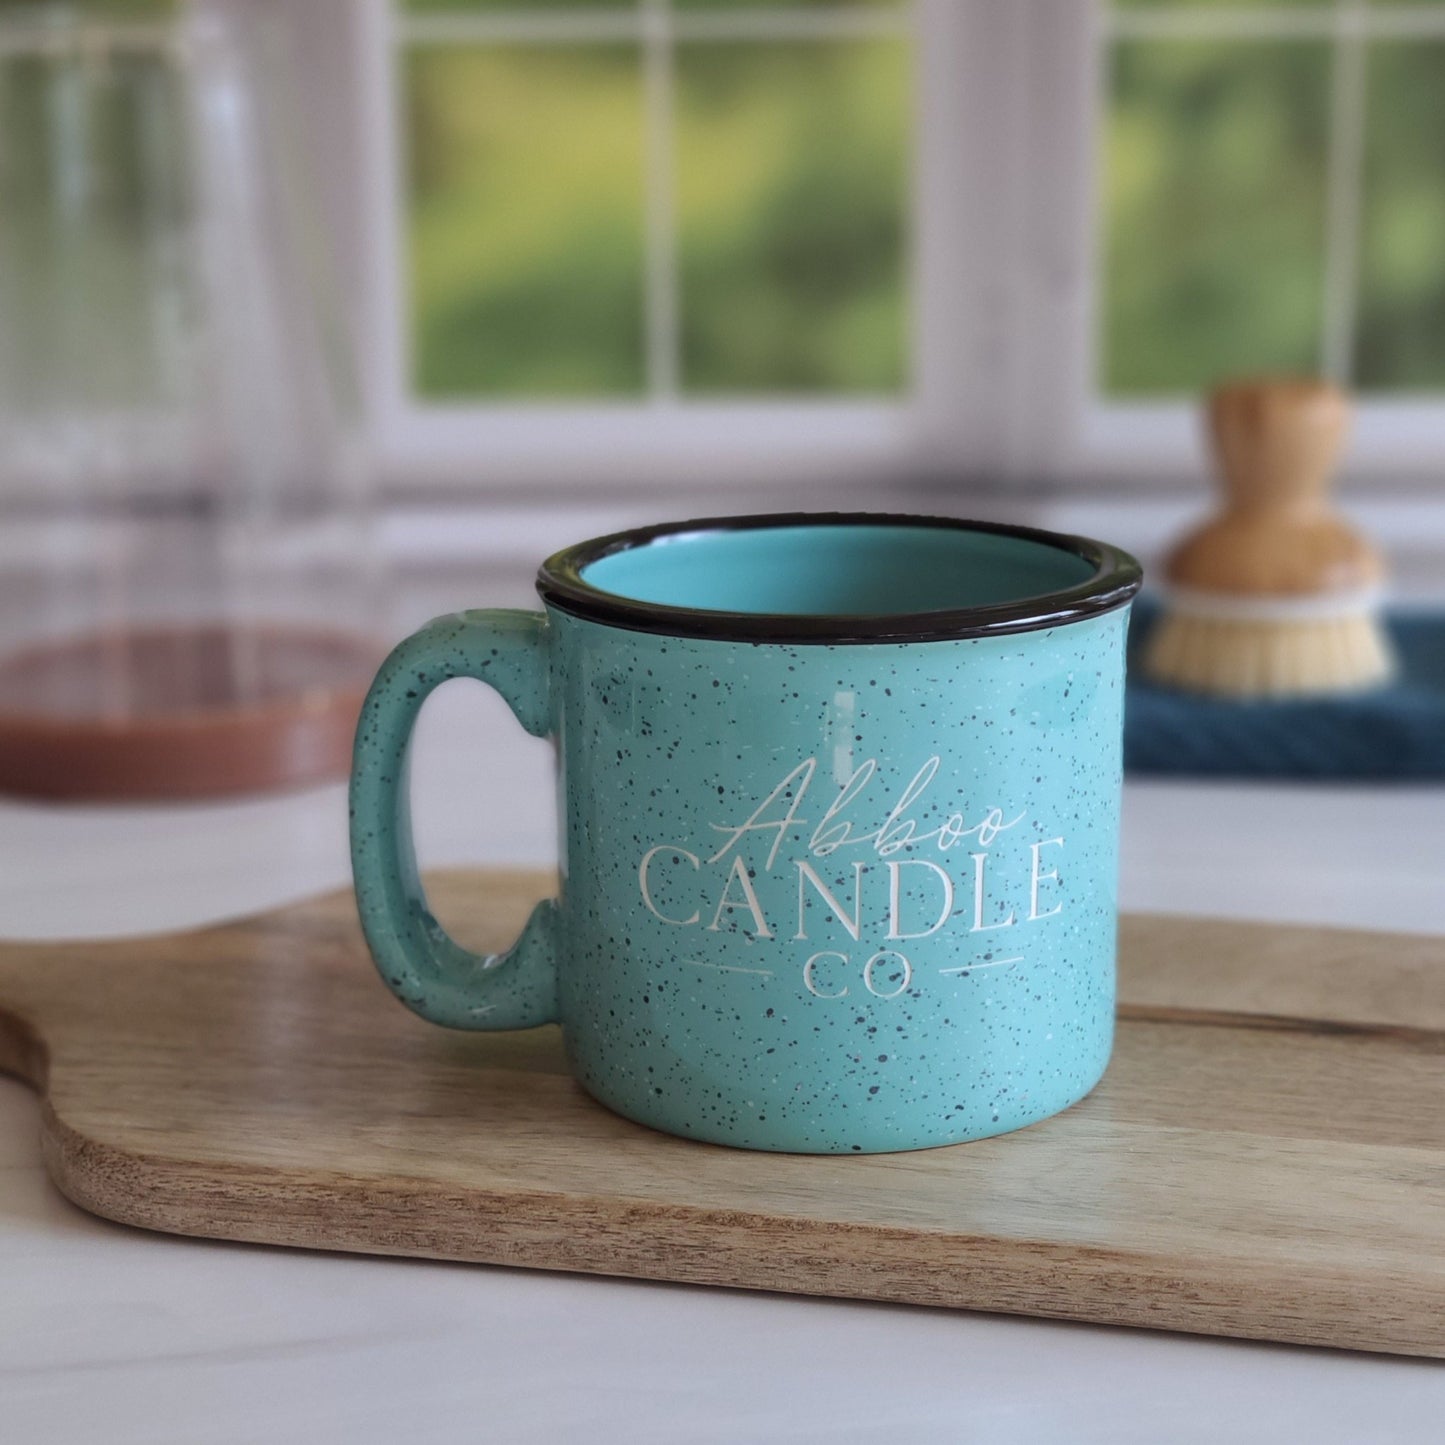 Teal Abboo Candle Co Logo Mug and Cup of Sunshine Organic Tea Set - Abboo Candle Co